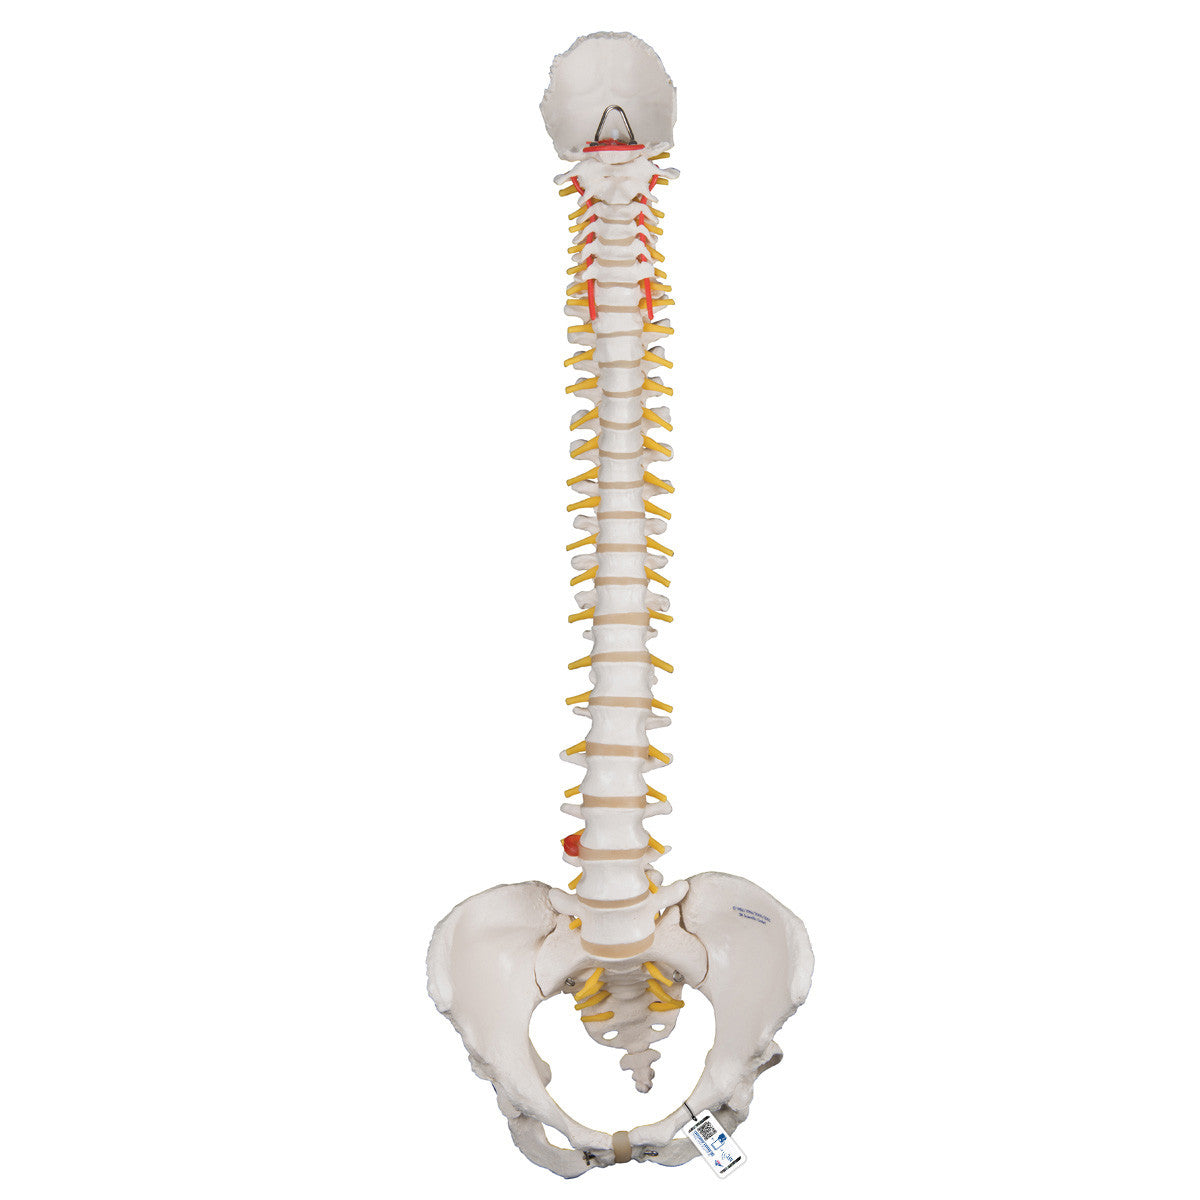 a58-4_01_1200_1200_classic-flexible-human-spine-model-with-female-pelvis-3b-smart-anatomy__09860.1589753024.1280.1280.jpg